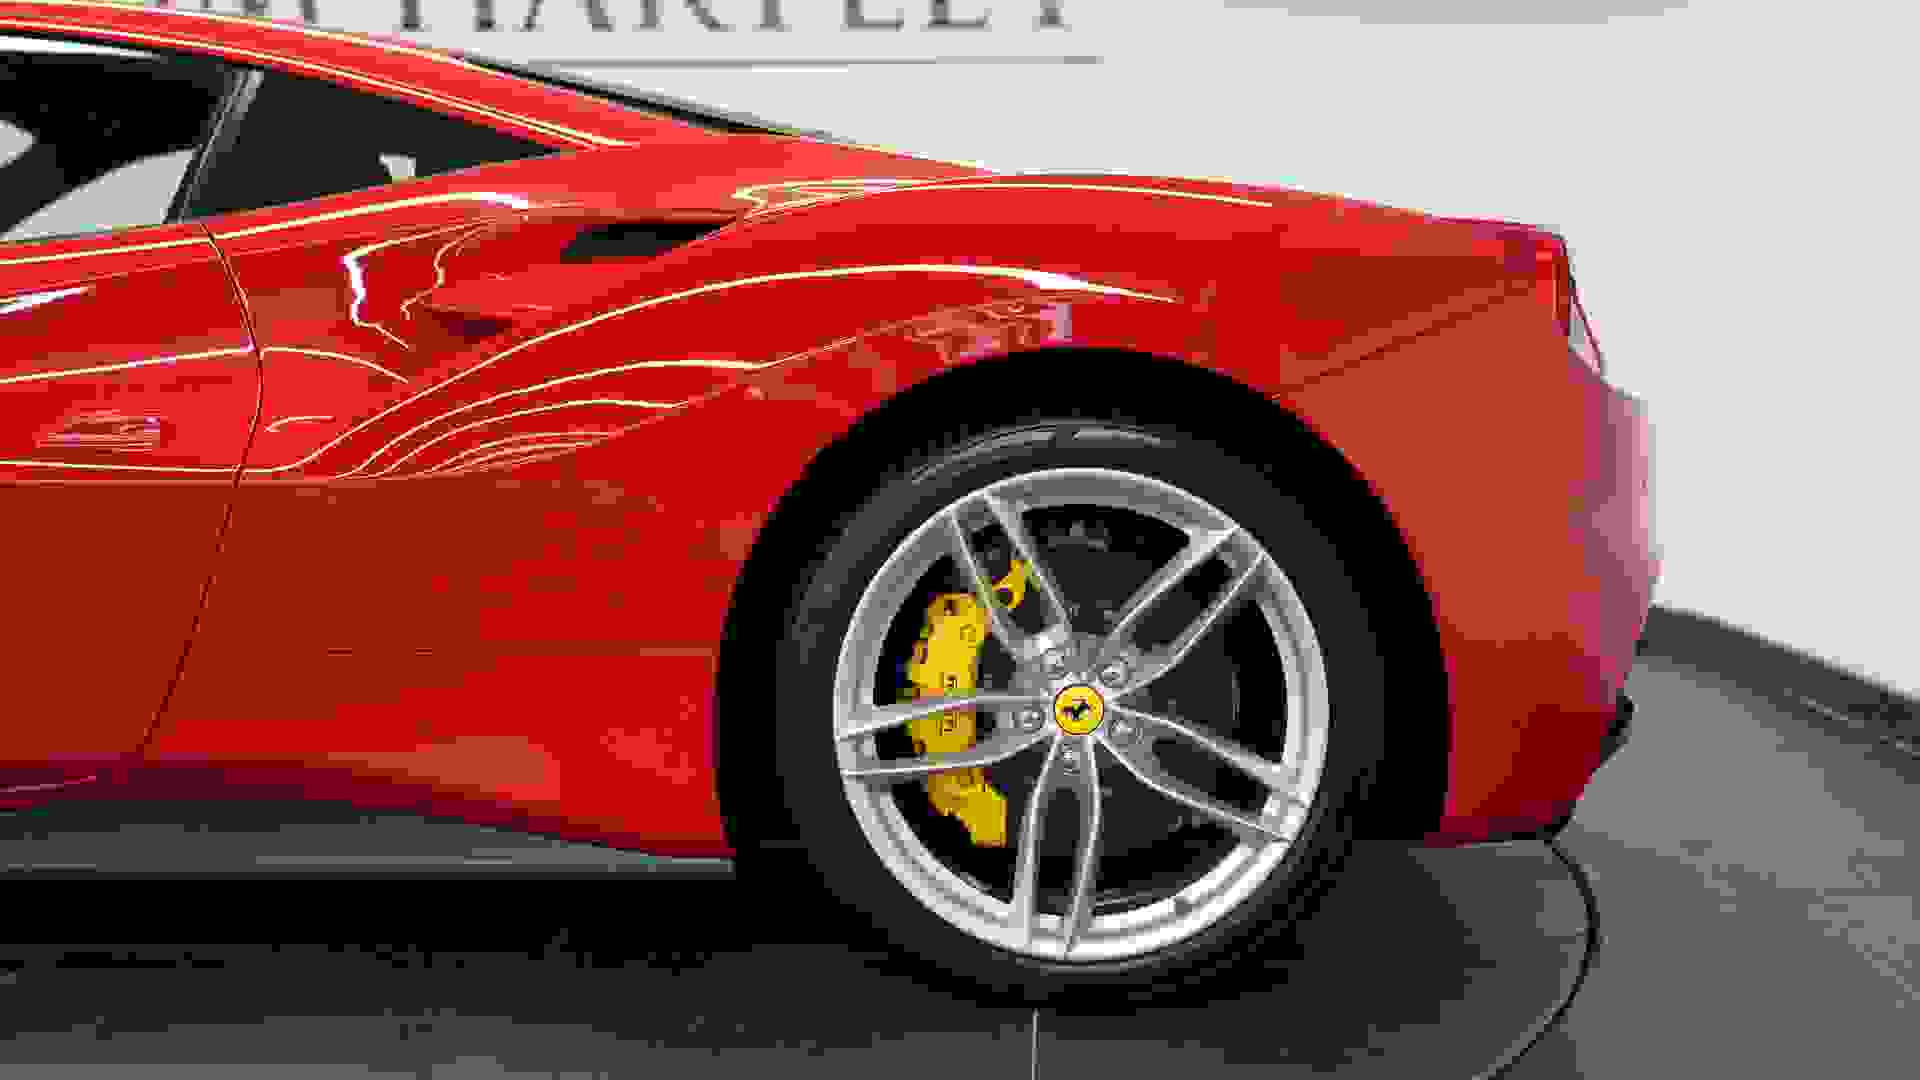 Ferrari 488 Photo b43f3704-6989-4dc7-9e6d-539267e1c26a.jpg